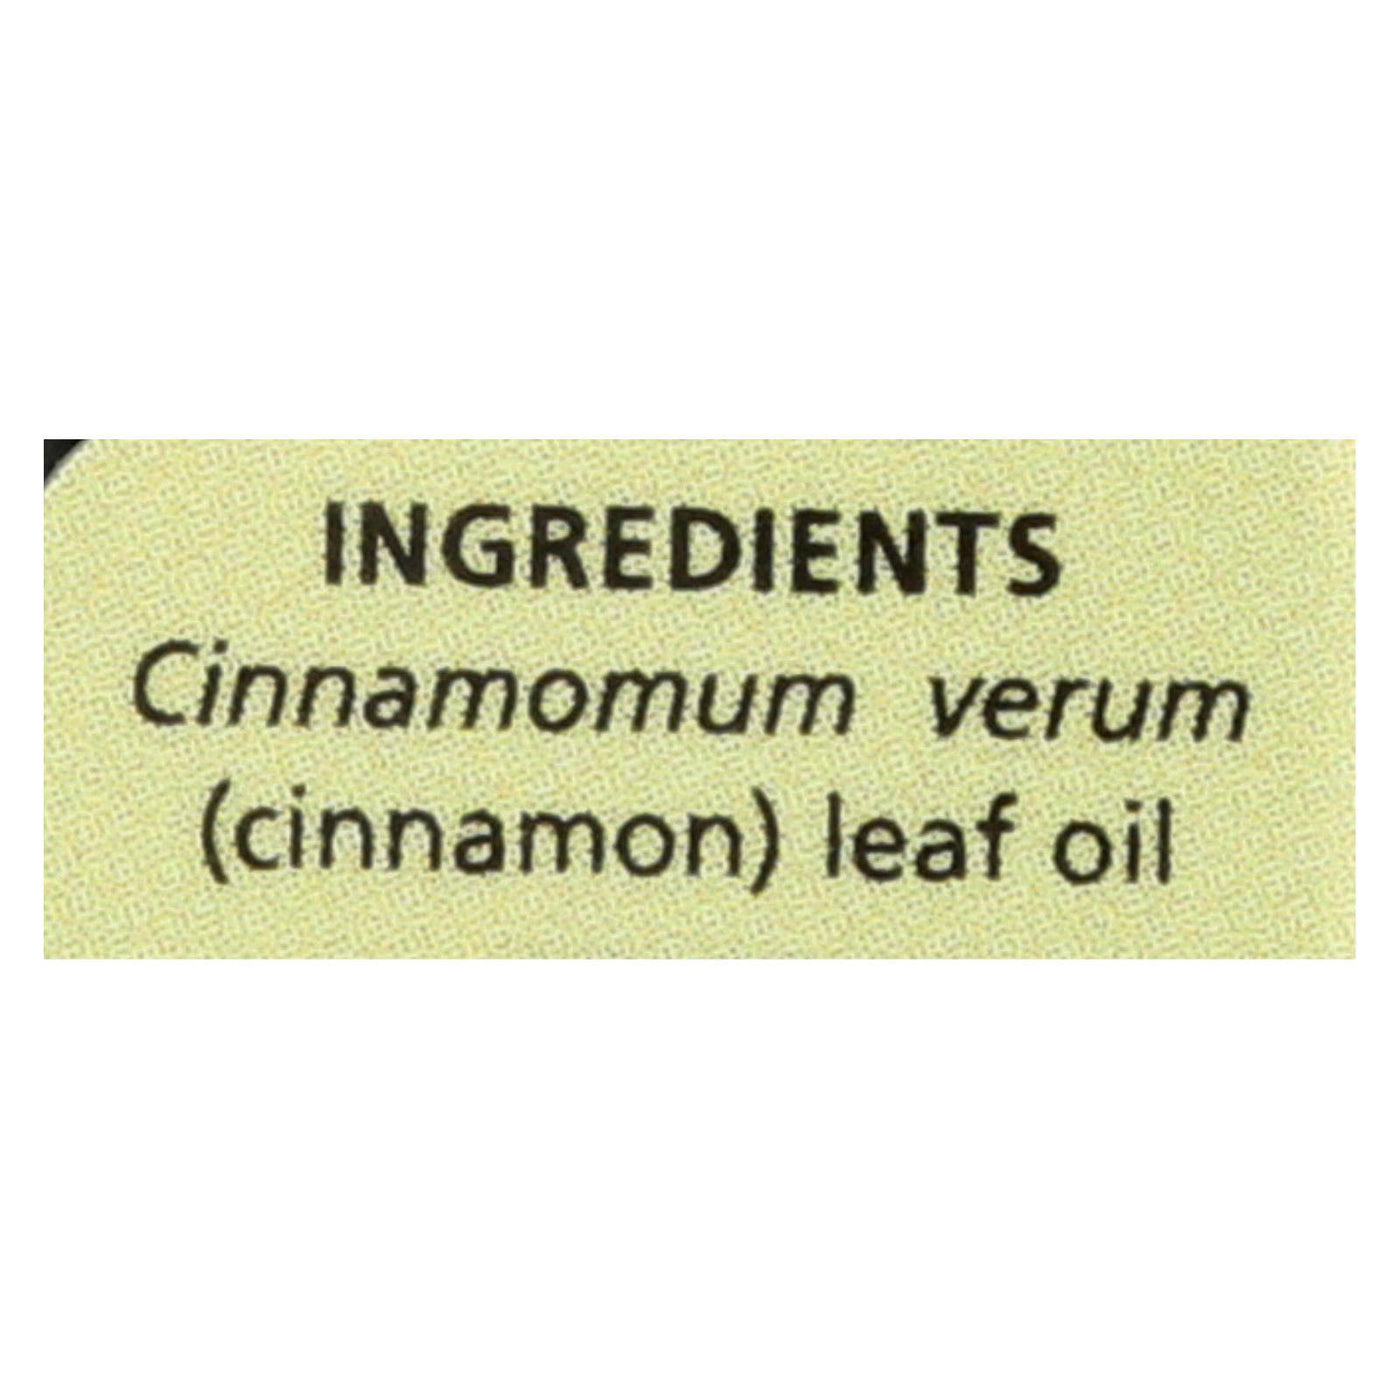 Buy Aura Cacia - Pure Essential Oil Cinnamon Leaf - 0.5 Fl Oz  at OnlyNaturals.us